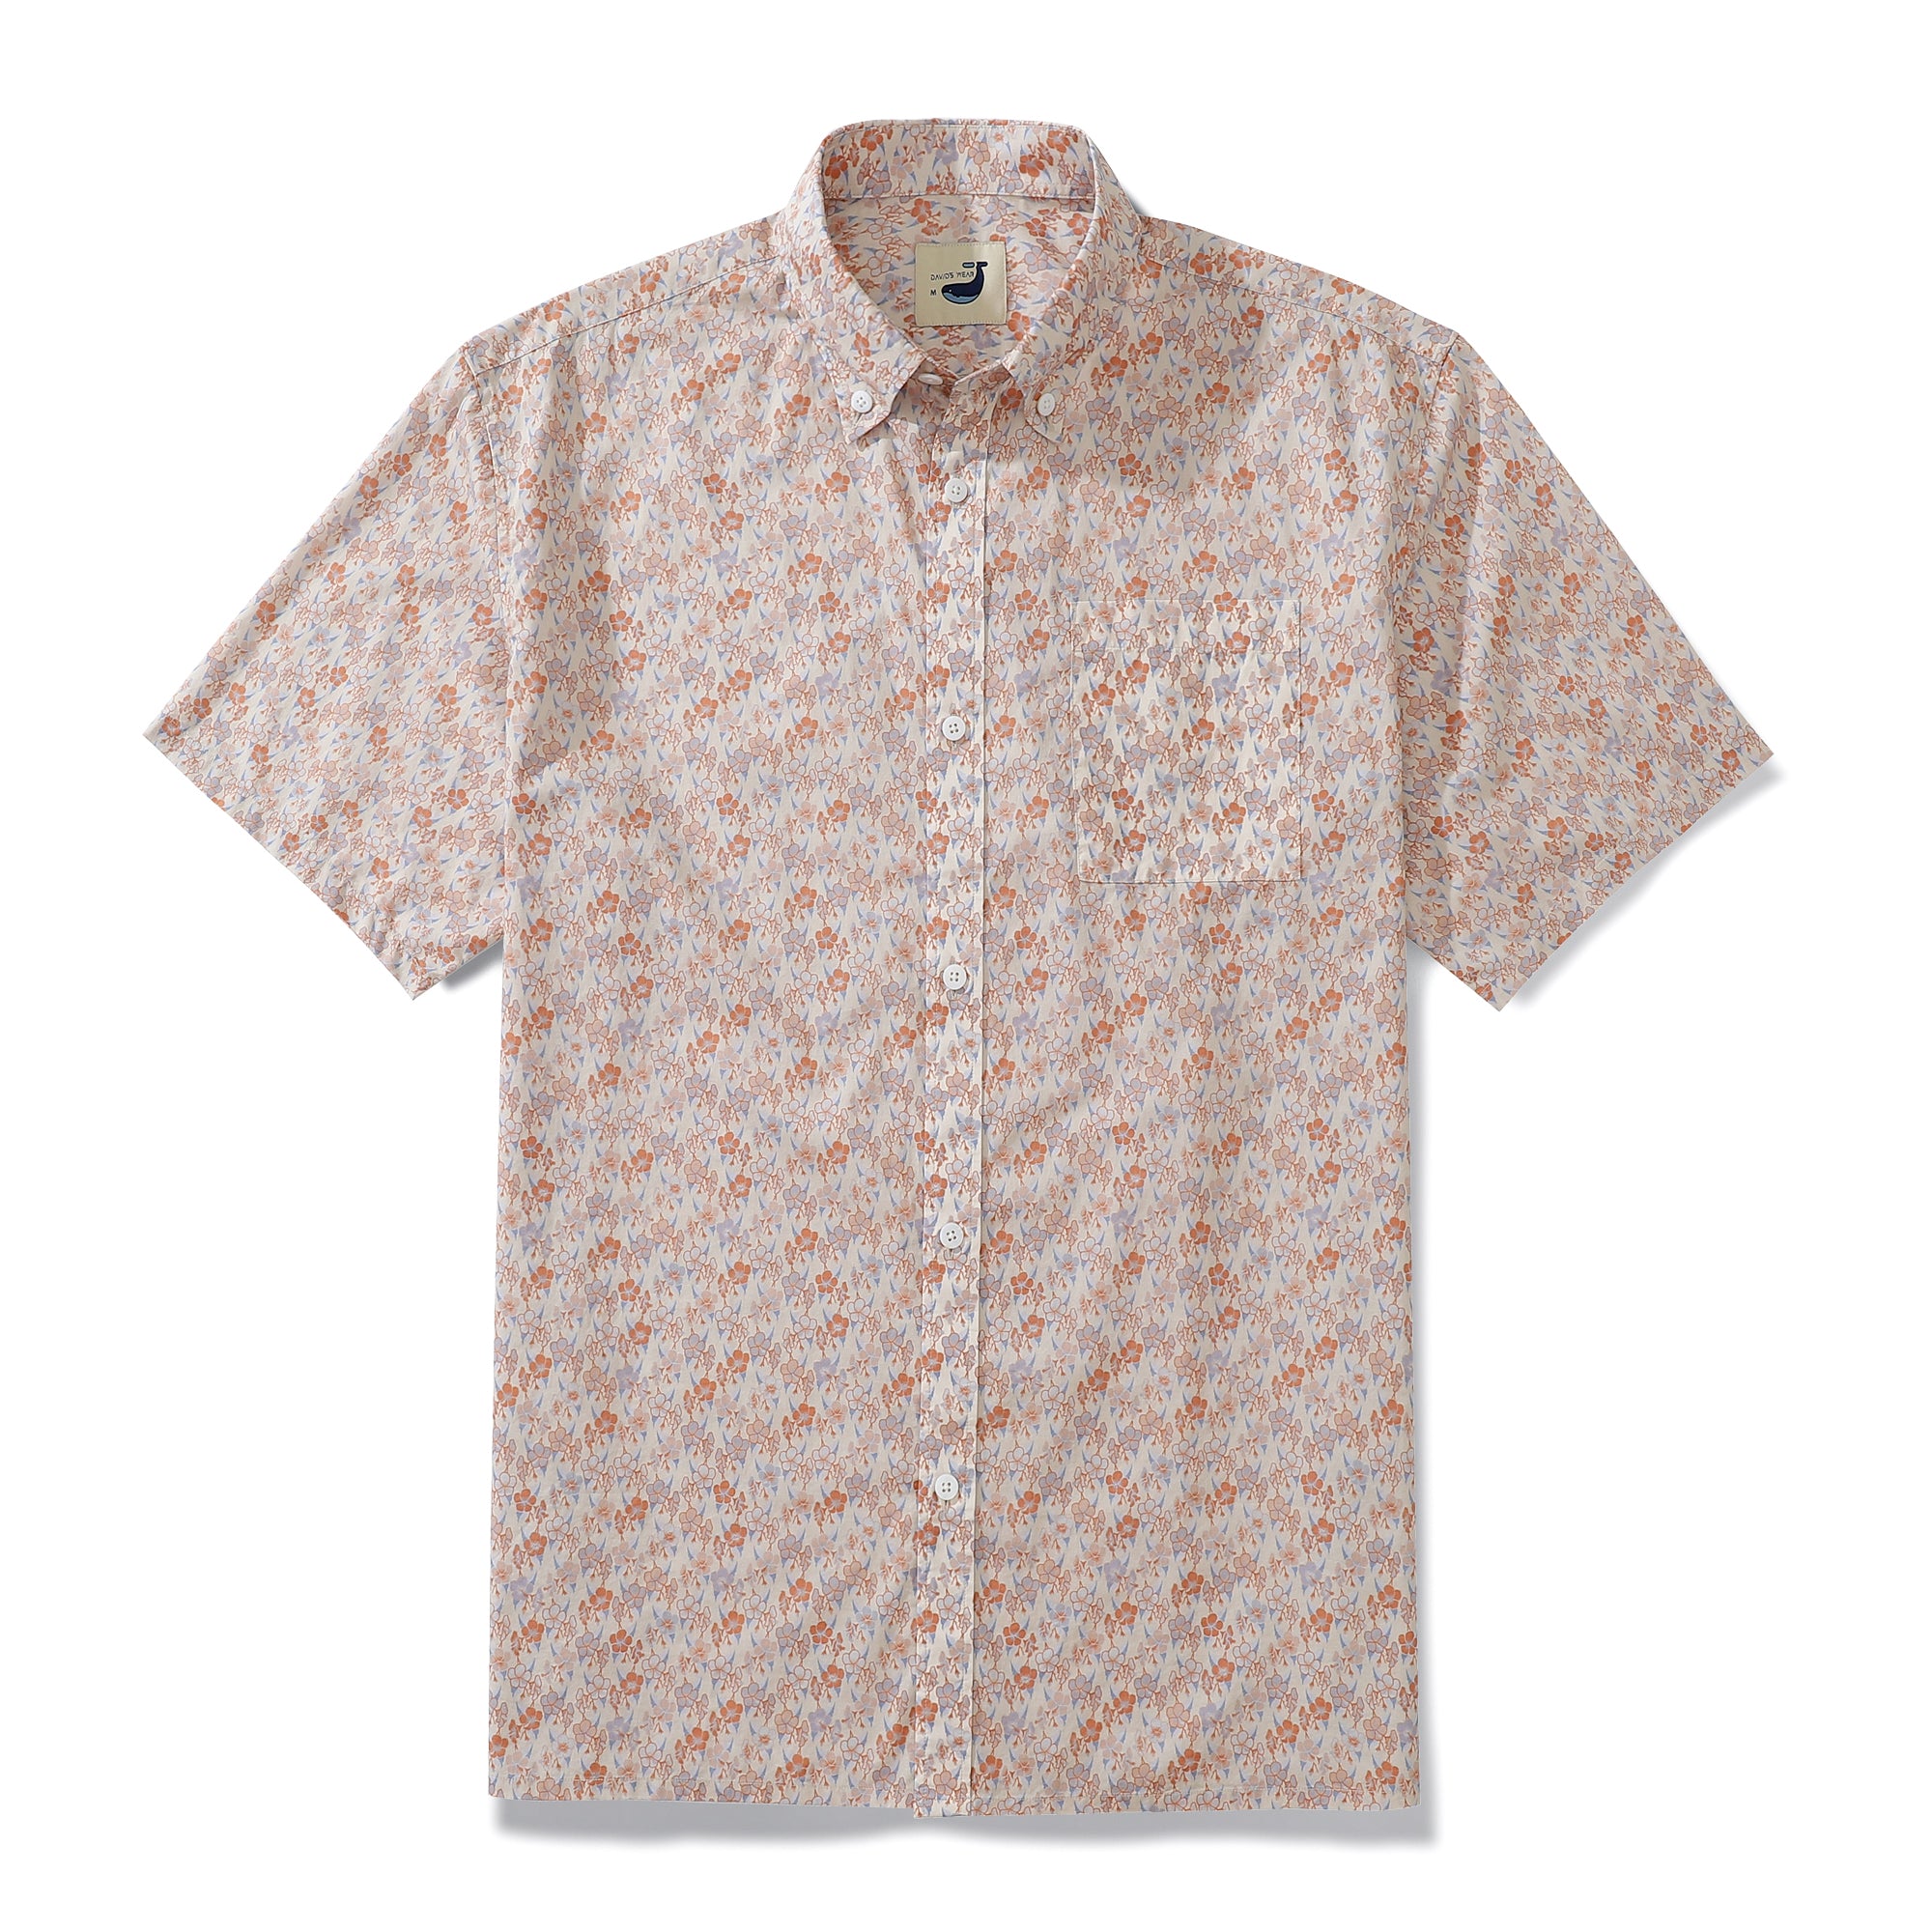 Men's Aloha Shirt Light Pink Floral Cotton Short Sleeve Button Down Pocket Workwear